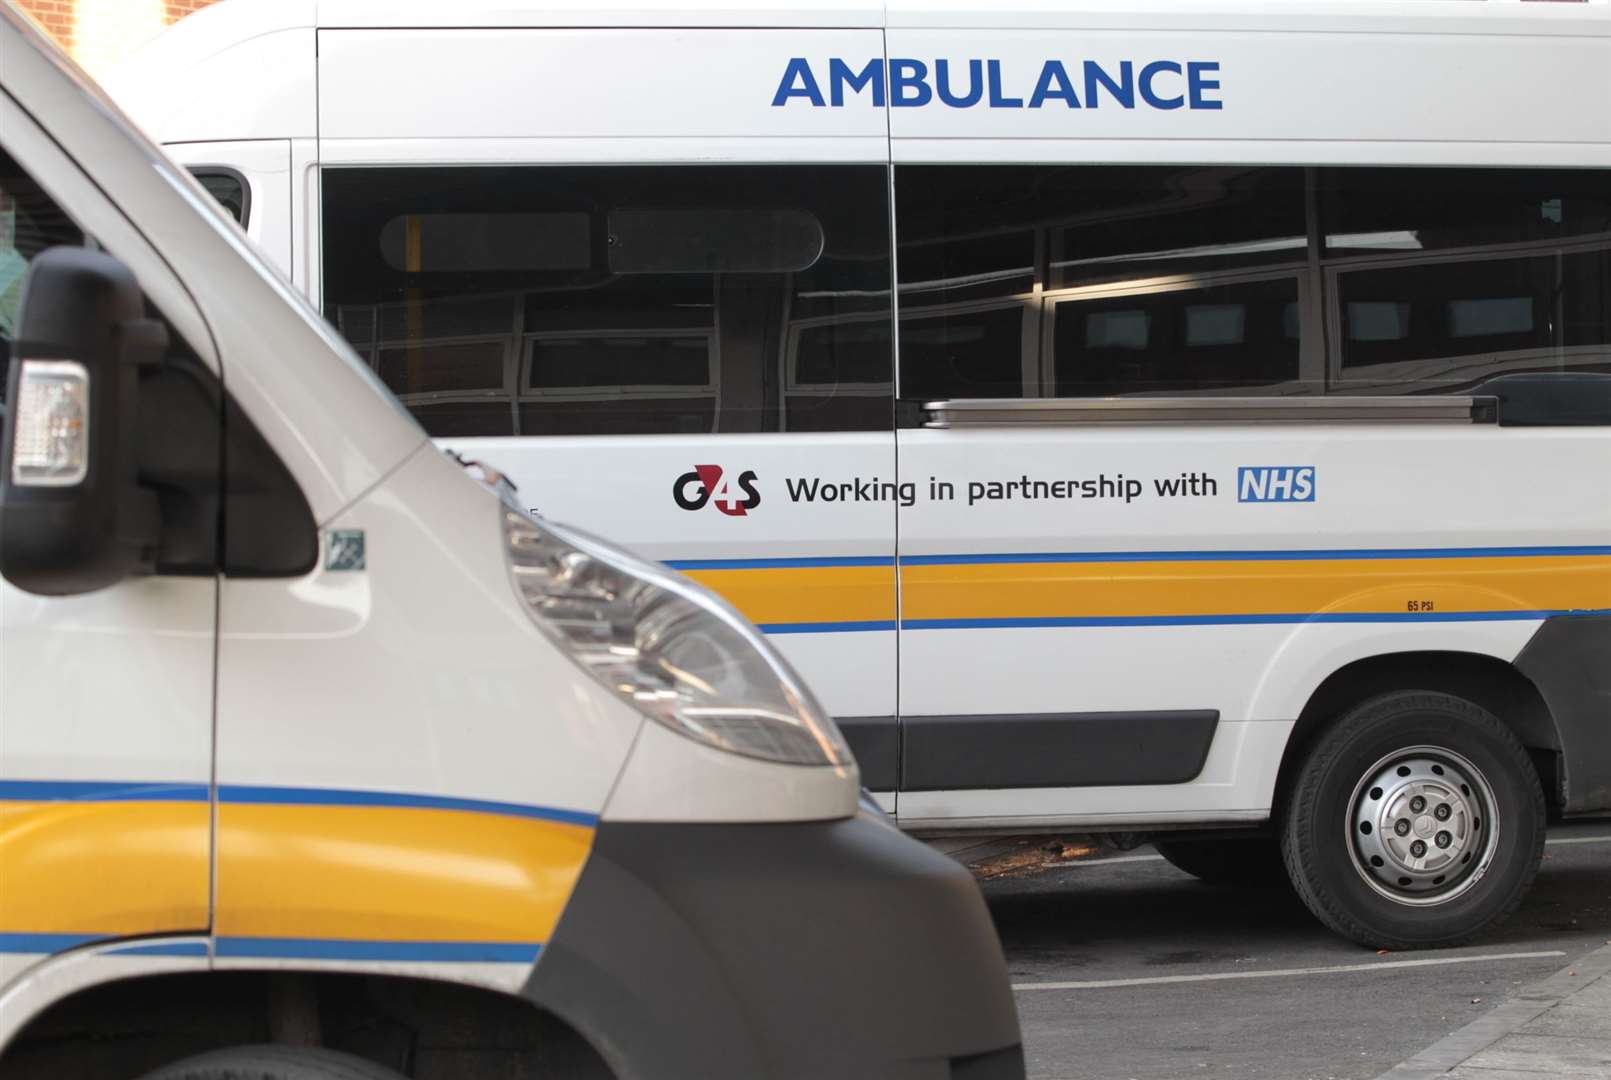 G4S patient transport service. Stock image